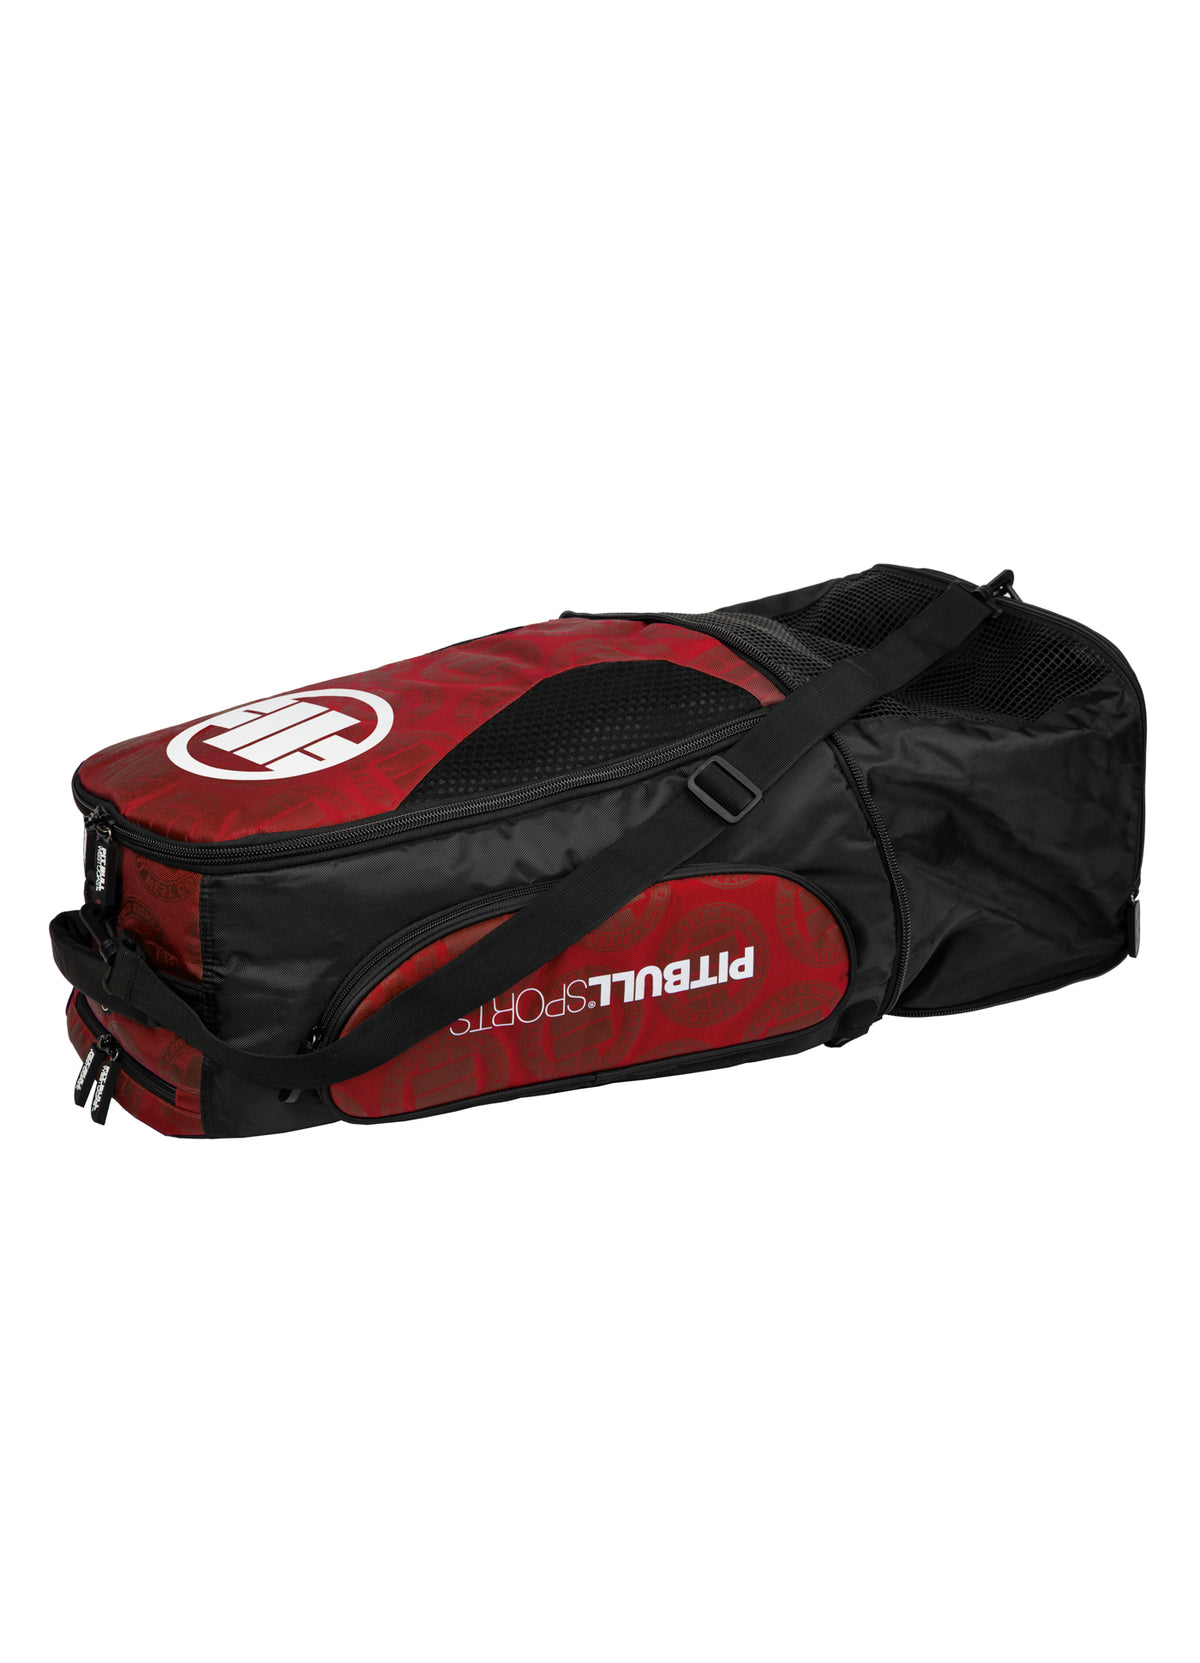 LOGO Red Medium Training Backpack